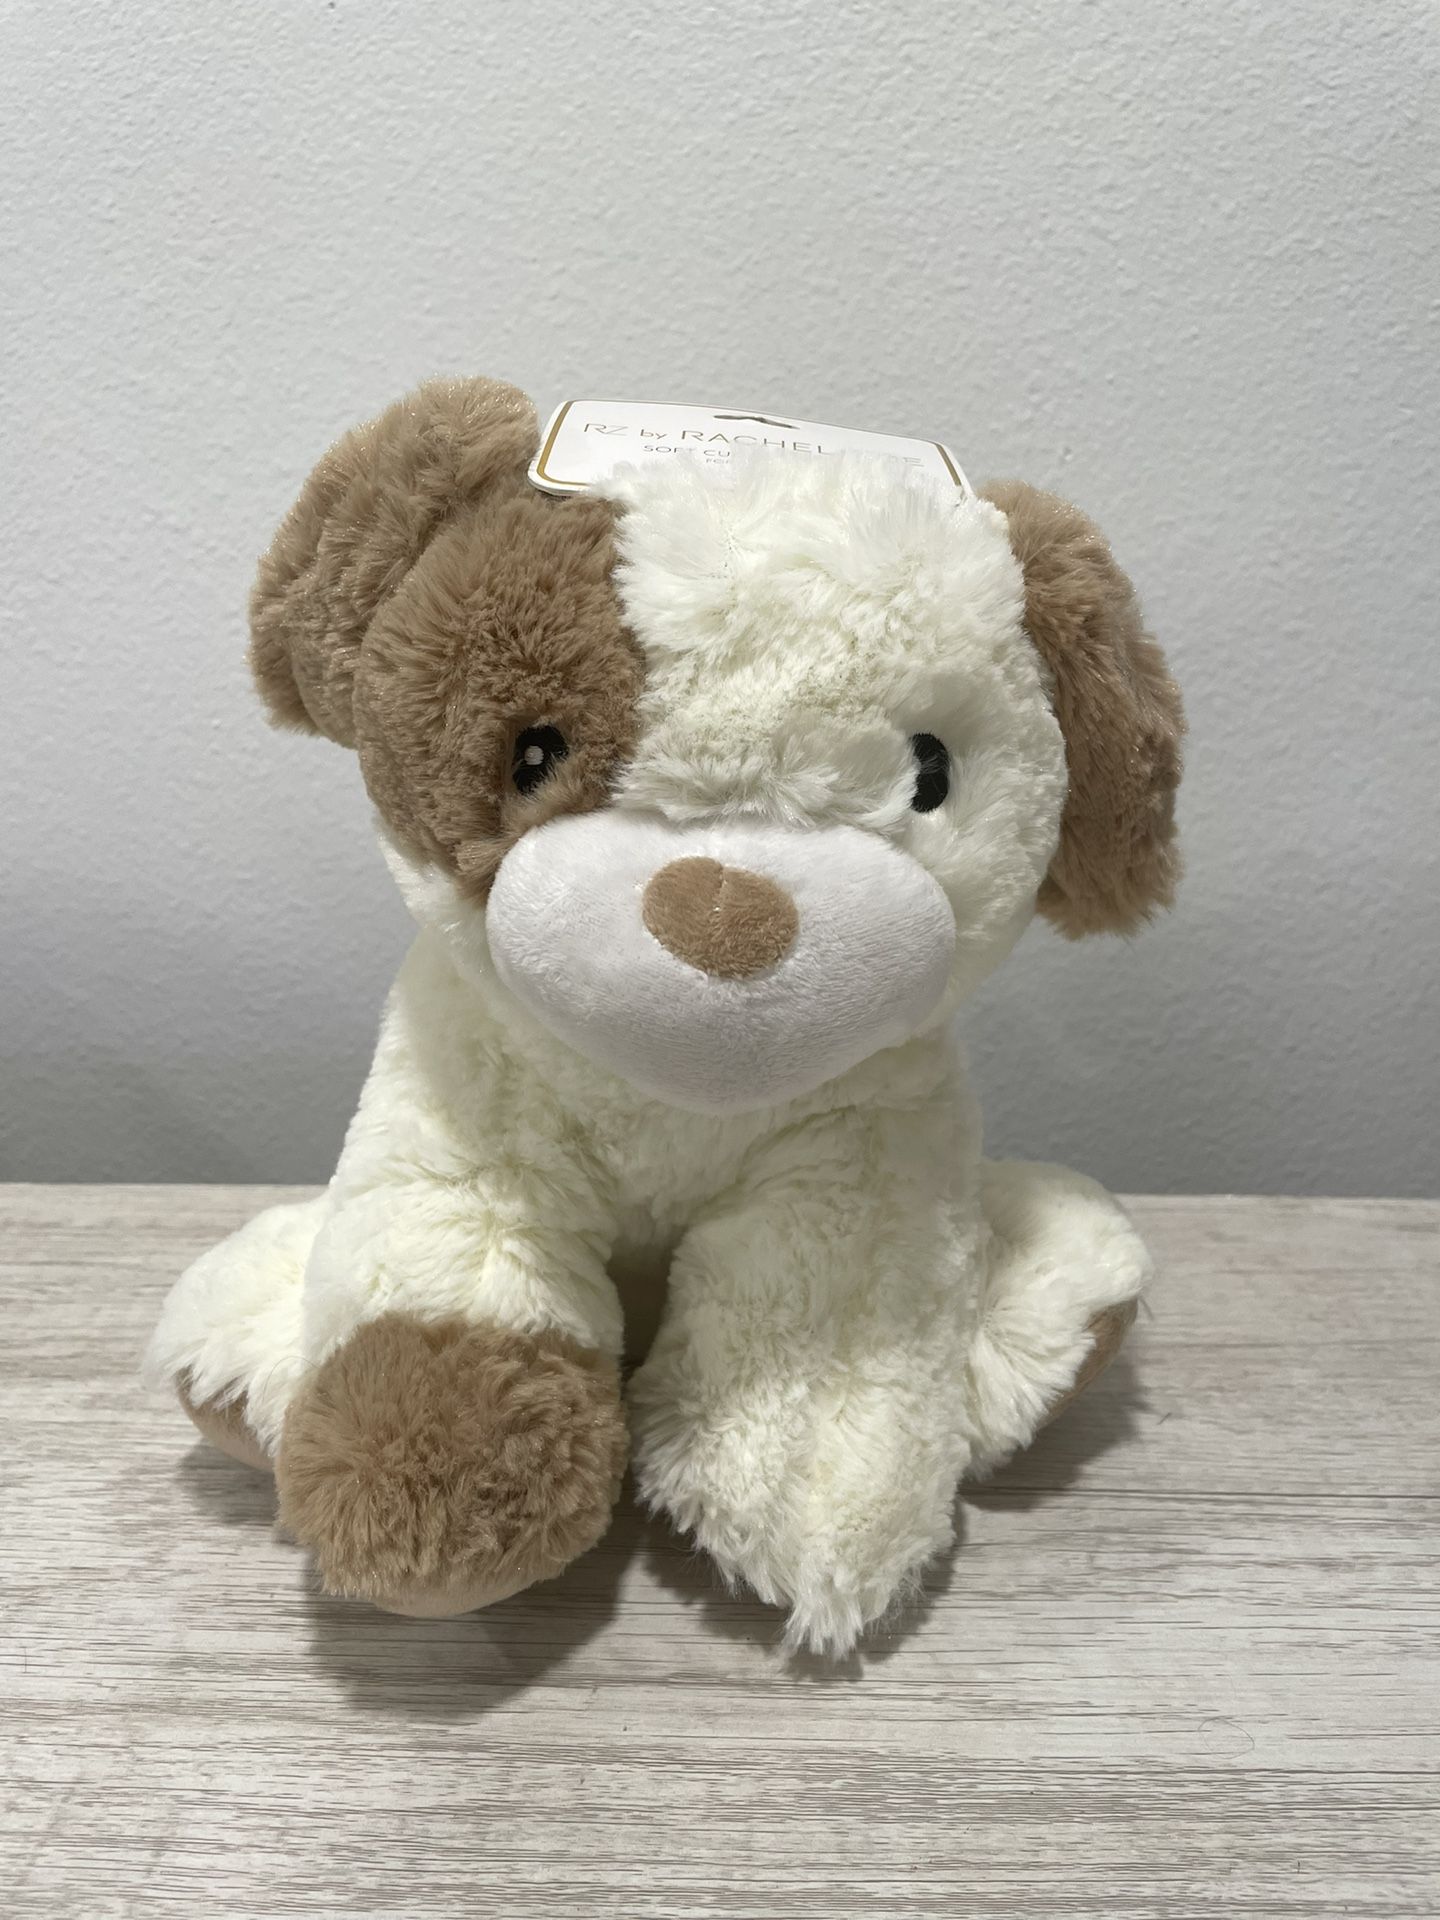 New Stuffed Animal Rattle Dog Baby Toy